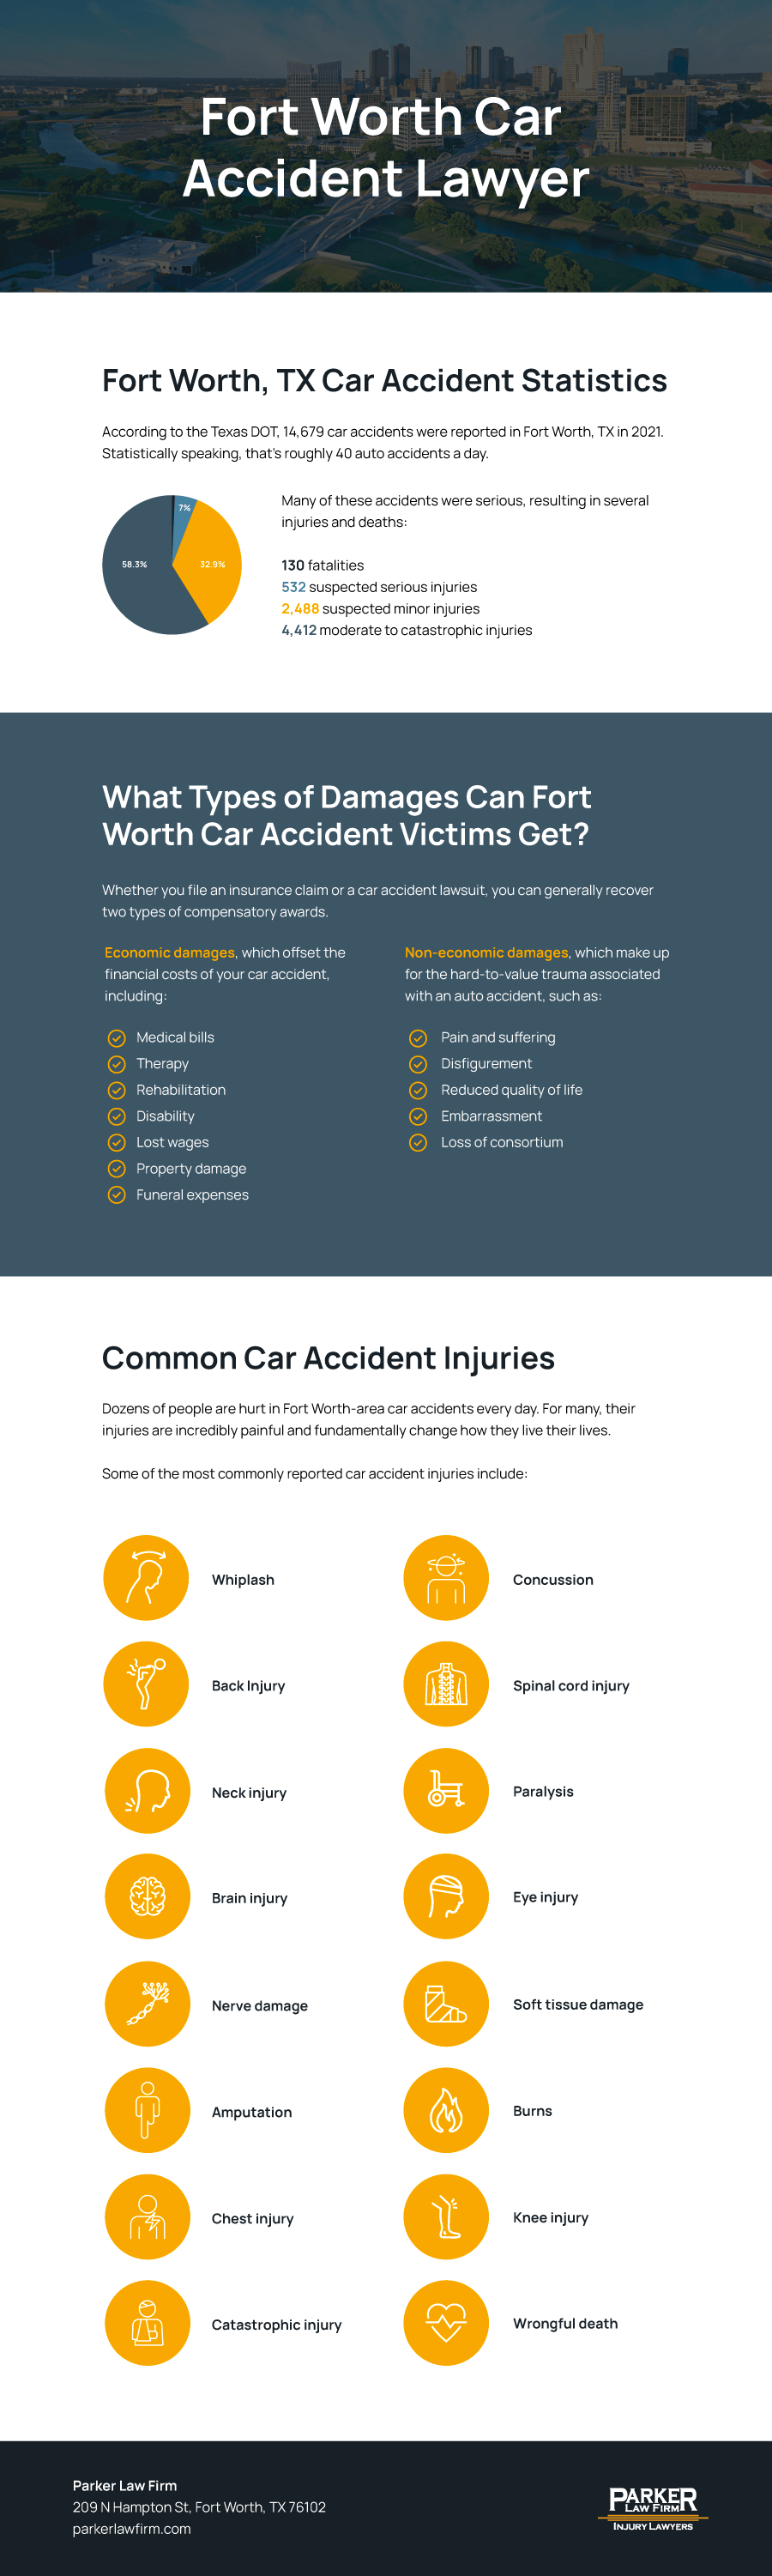 Texas Automobile Accident Attorneys